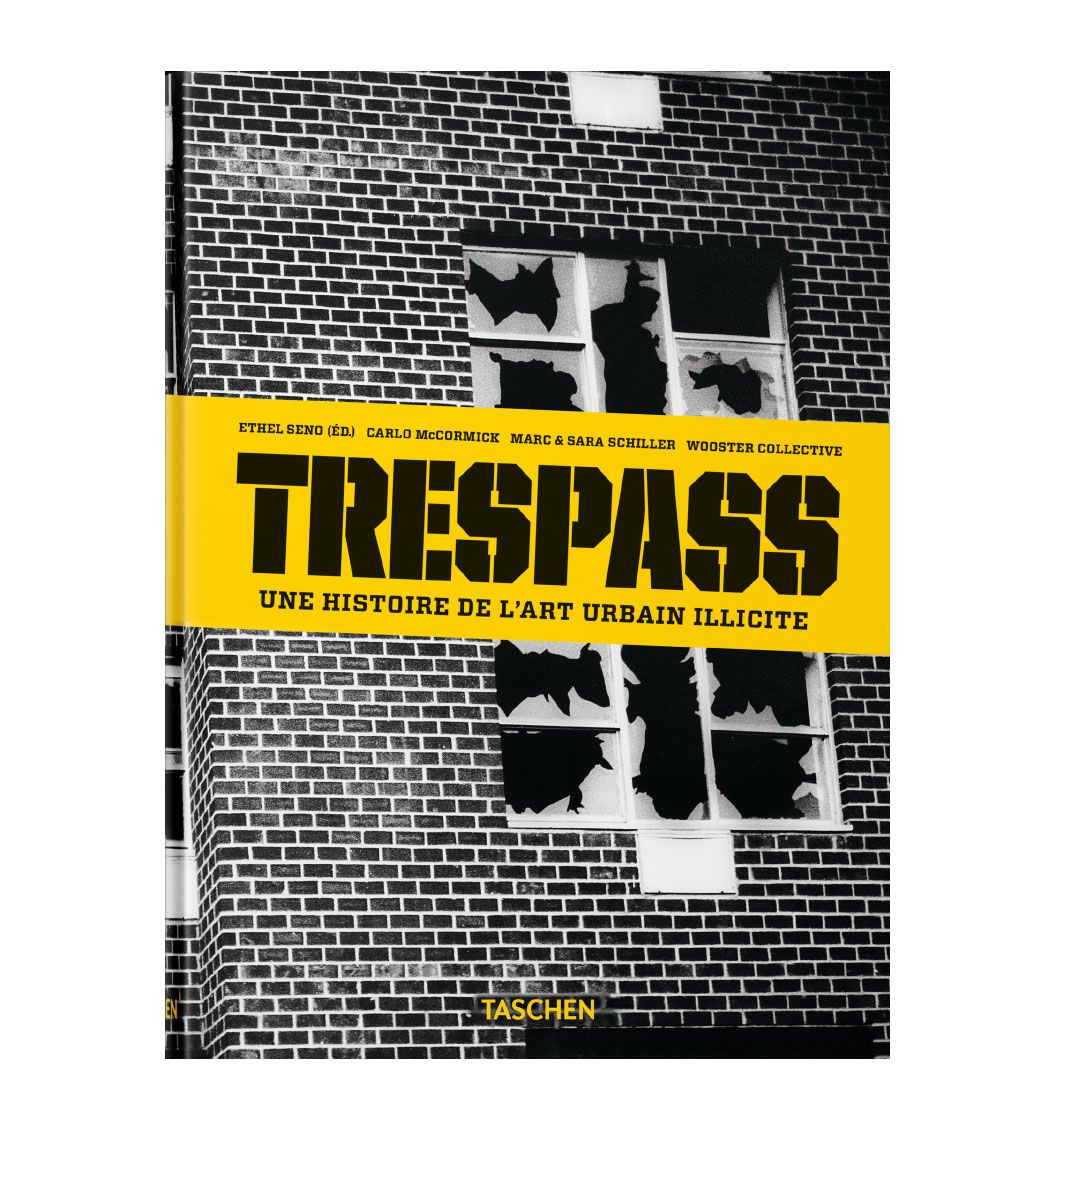 Trespass, histoire de l'art urbain illicite